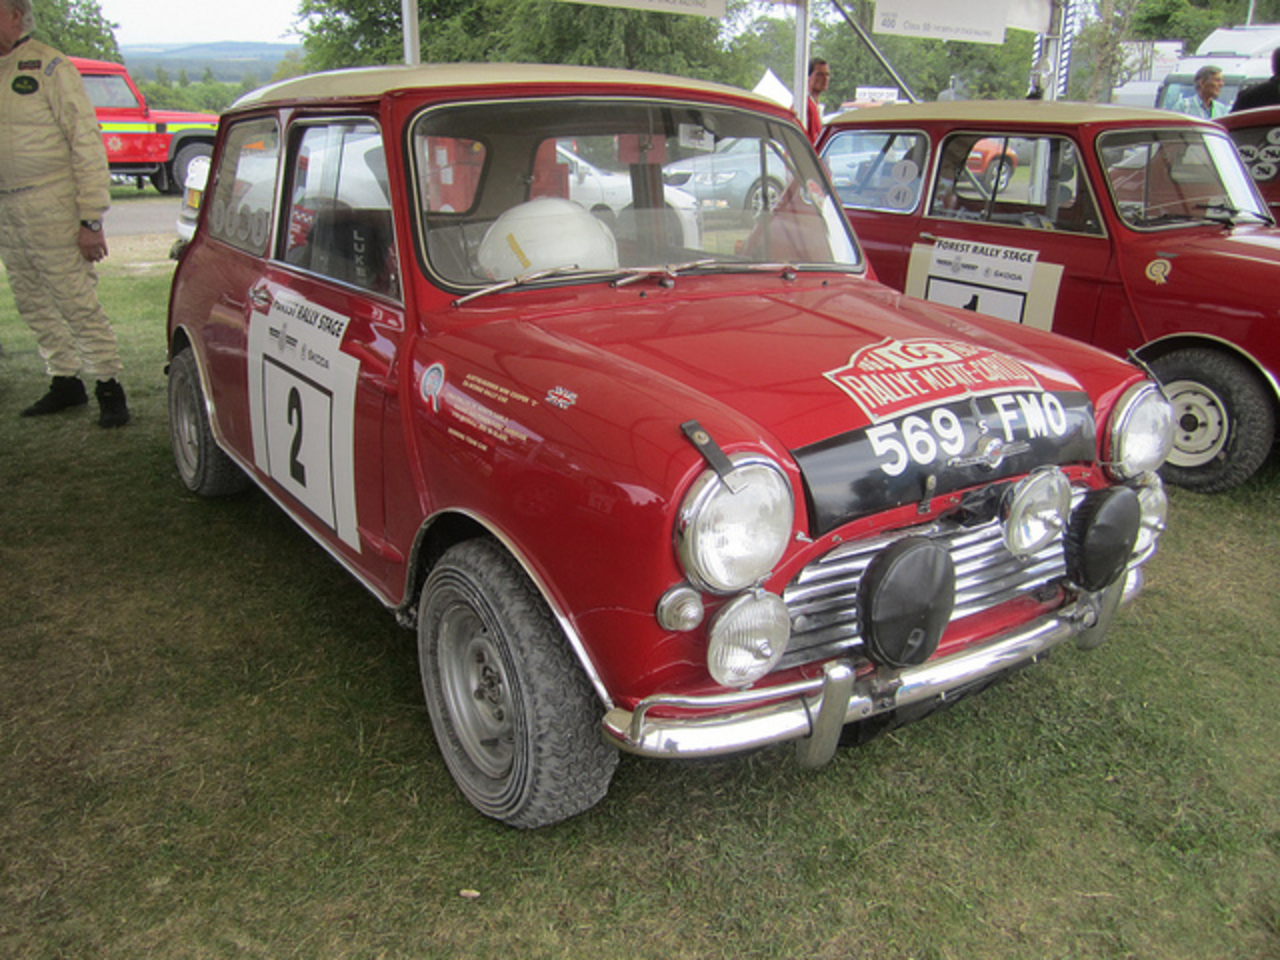 Voiture de Rallye Morris Mini Cooper S 1963 / Flickr - Partage de photos!